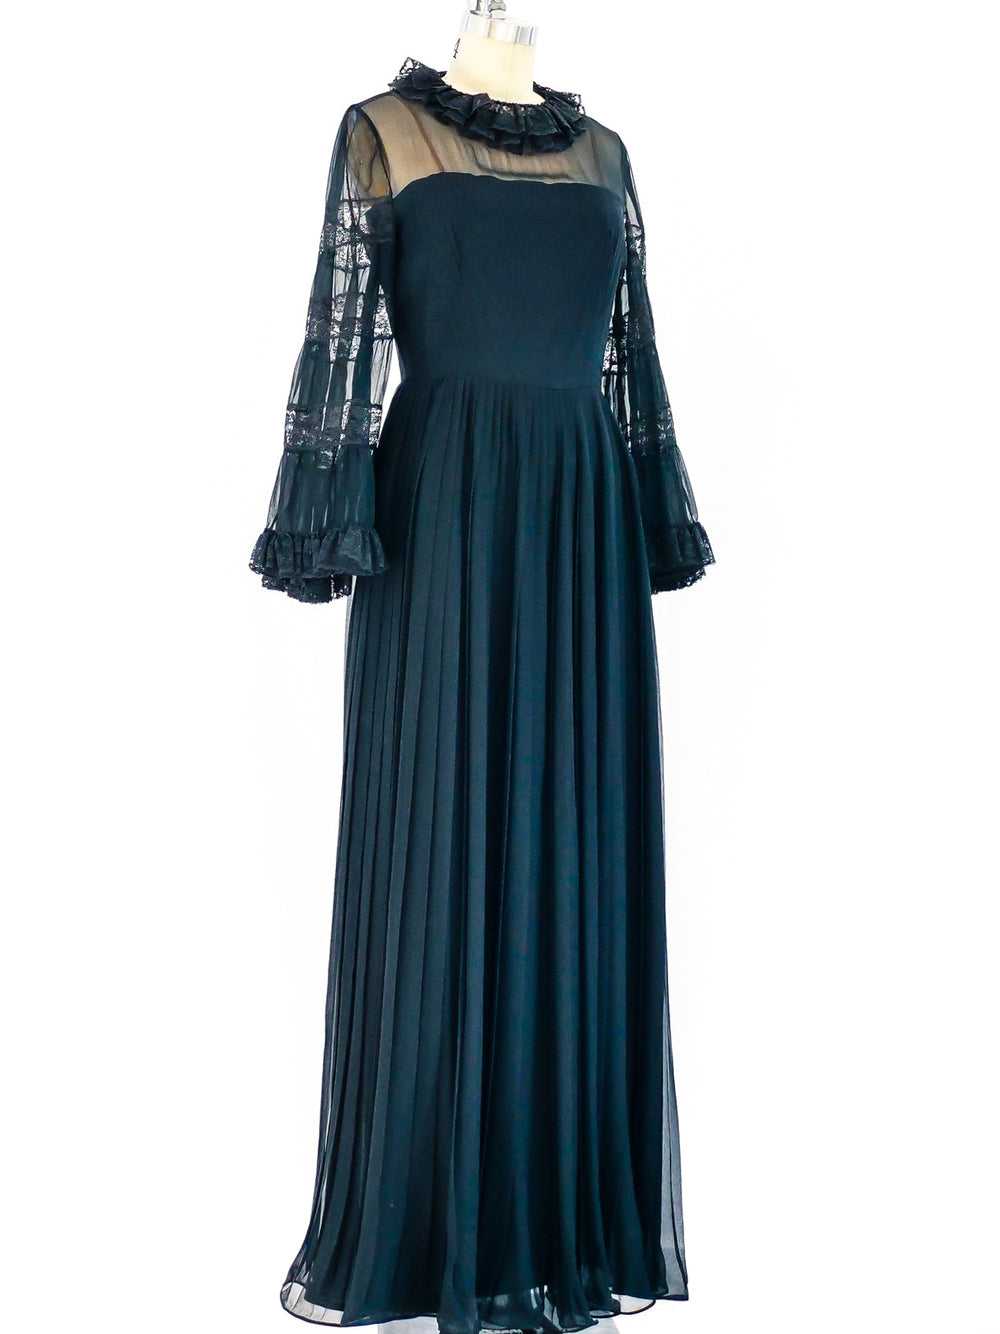 Elizabeth Arden Black Chiffon Gown - image 2